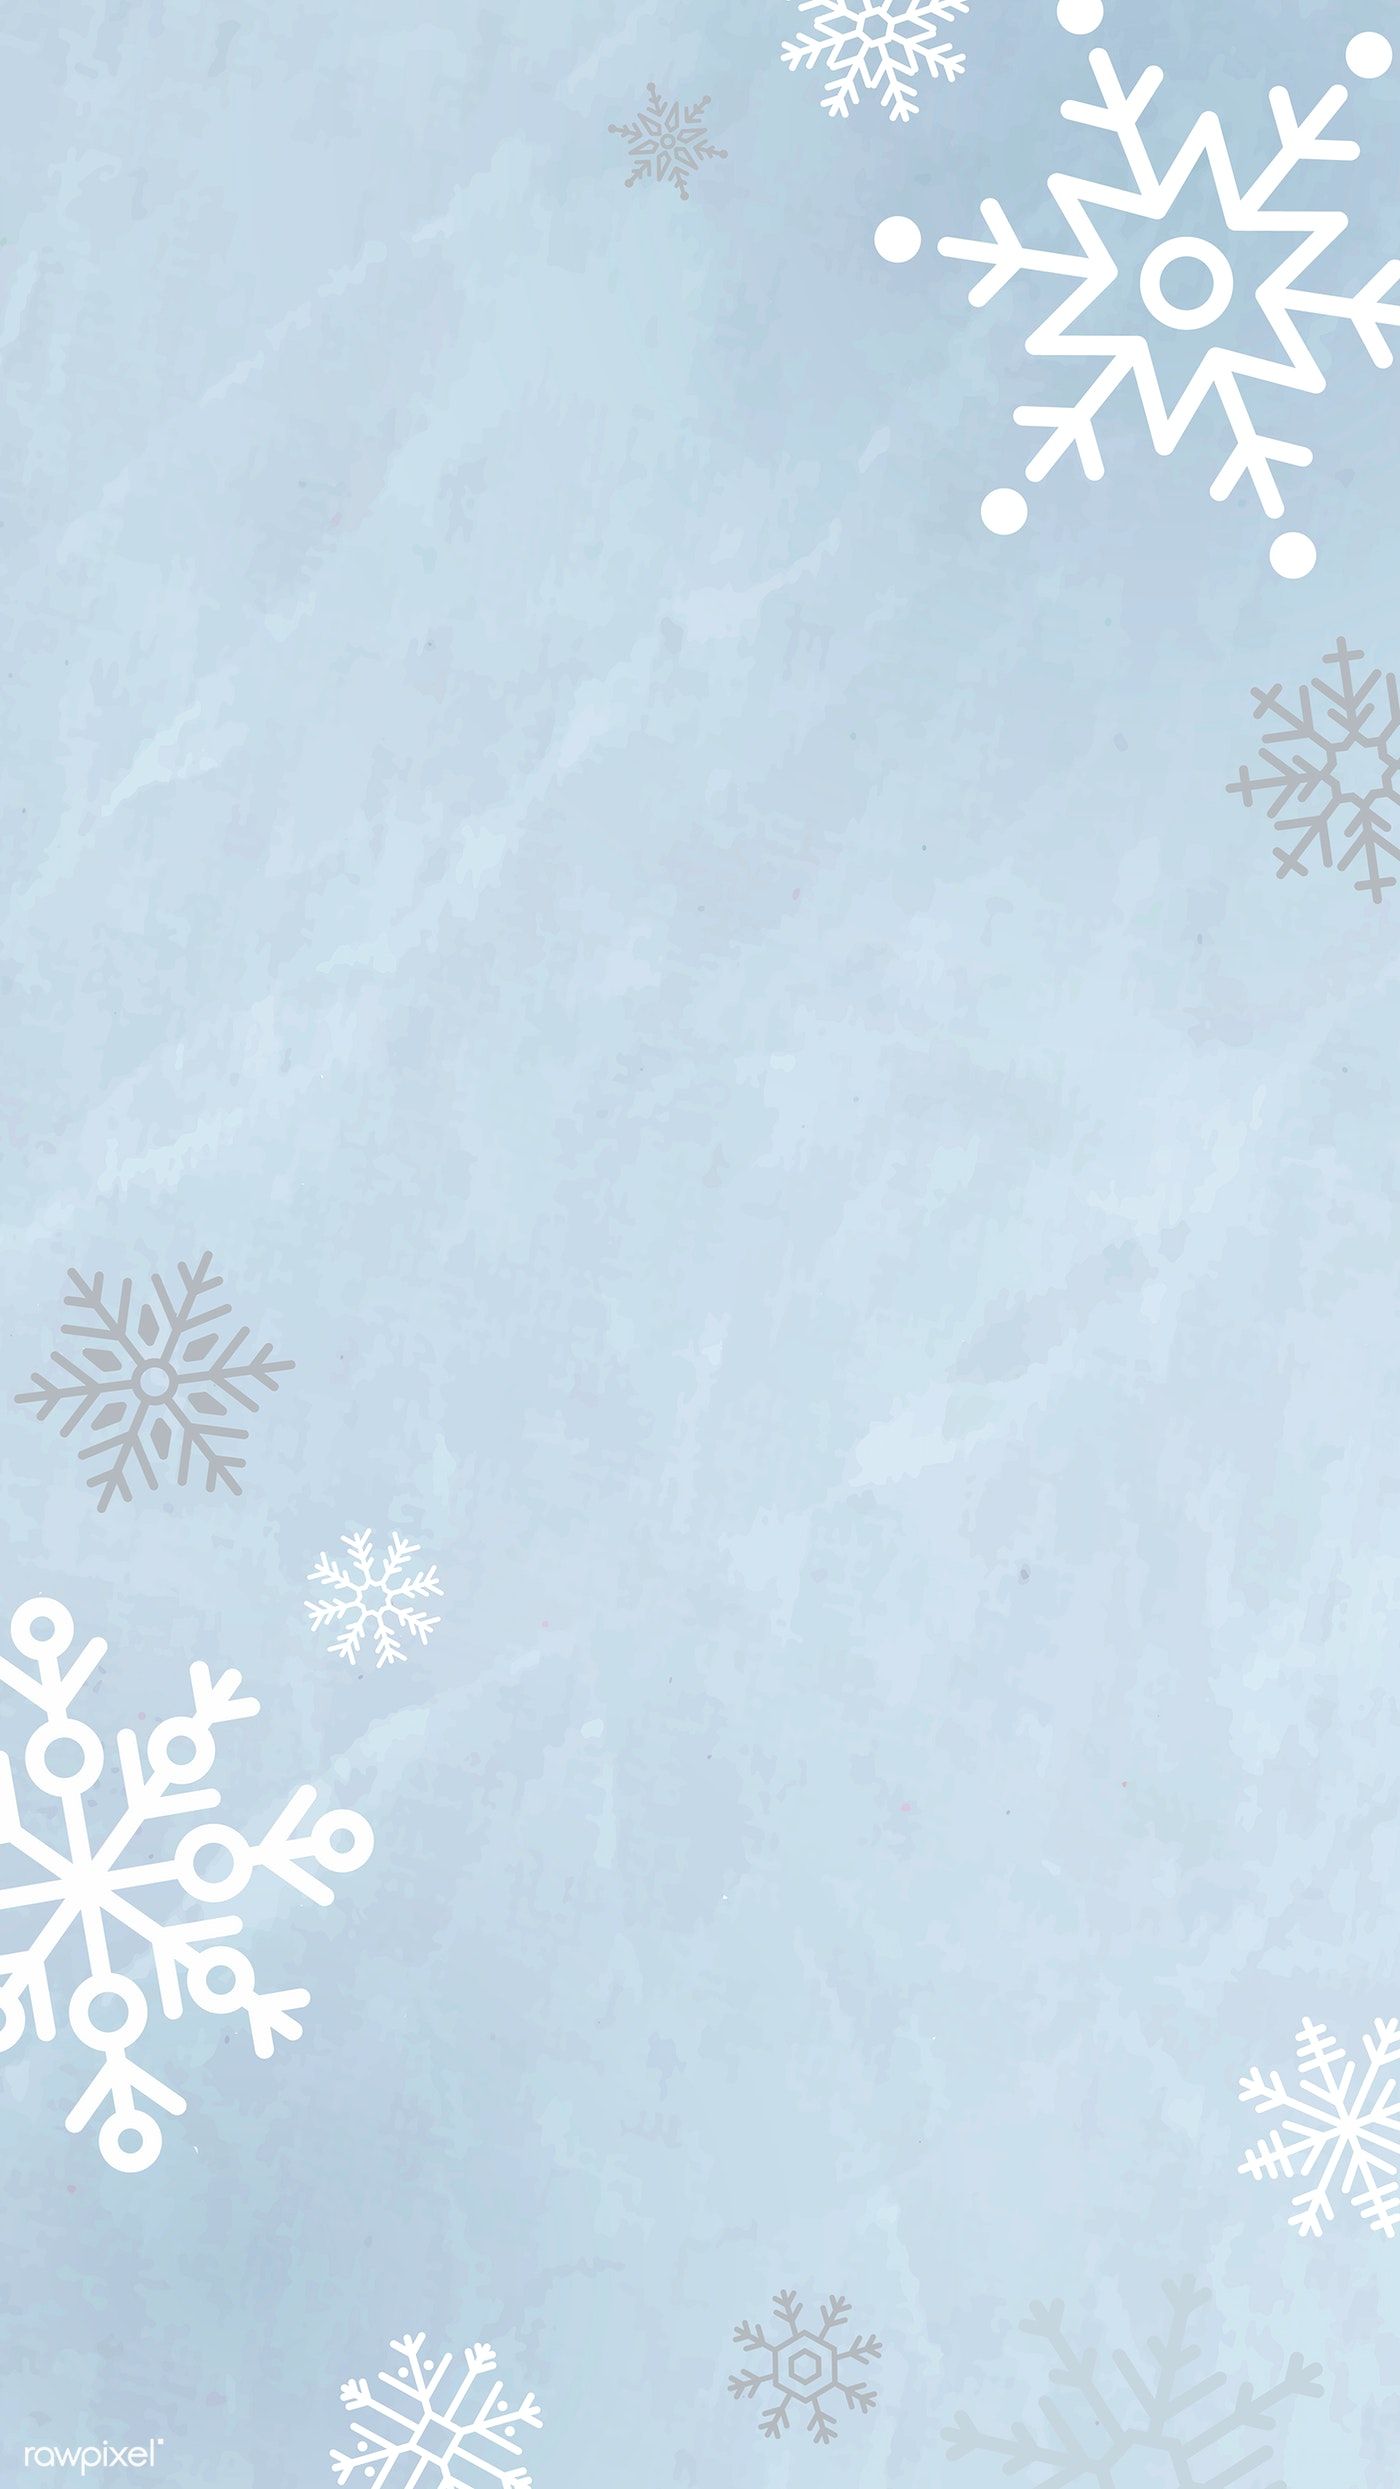 Christmas snowflake mobile wallpaper vector. premium image / sasi. Winter wallpaper, Snowflake wallpaper, Wallpaper iphone christmas